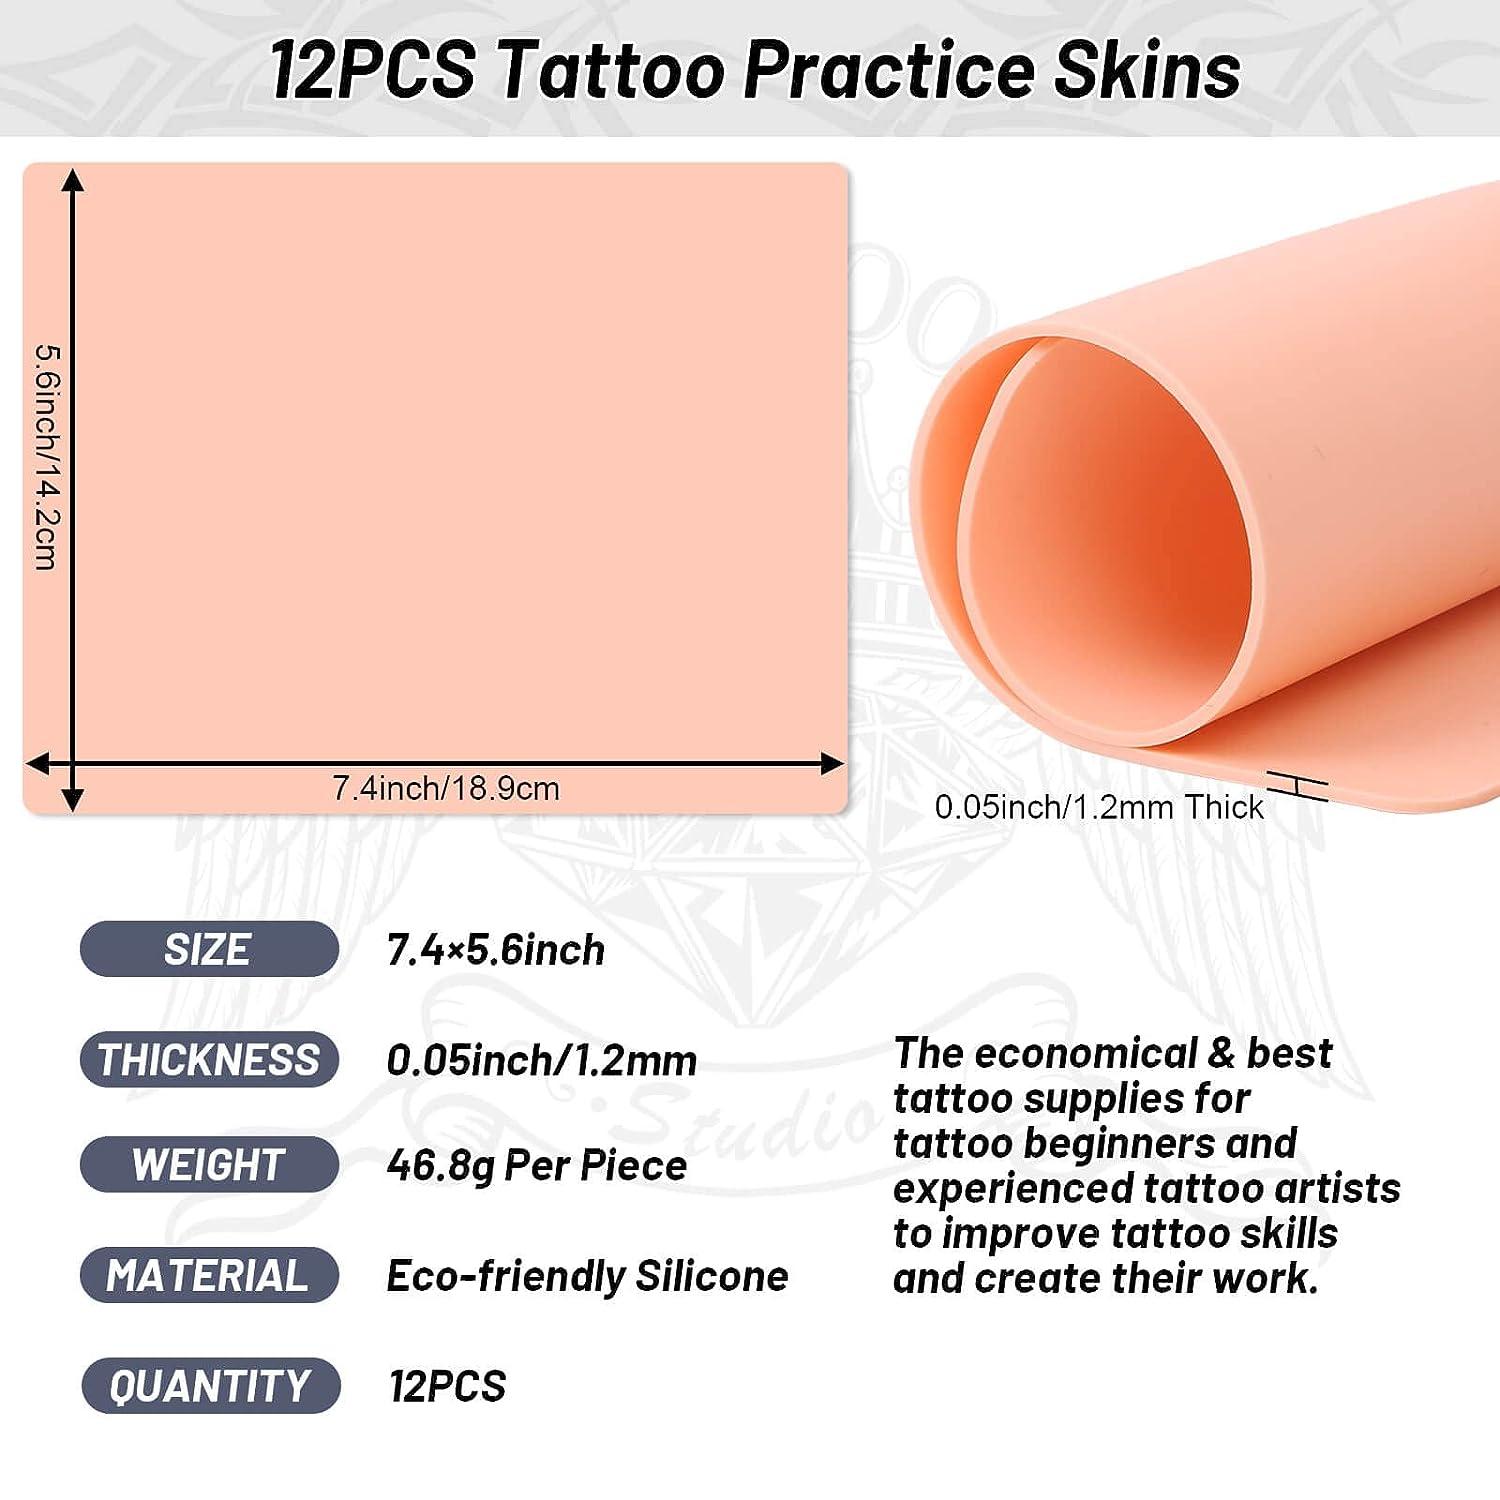 12PCS Tattoo Practice Skins, Modacraft Double Sides Tattoo Fake Skin 1.2mm  Thick Soft Tattoo Skin 7.45.6in Practice Skin for Tattooing, Silicone Fake  Skin for Tattoo Supplies Tattoo Kit for Beginners